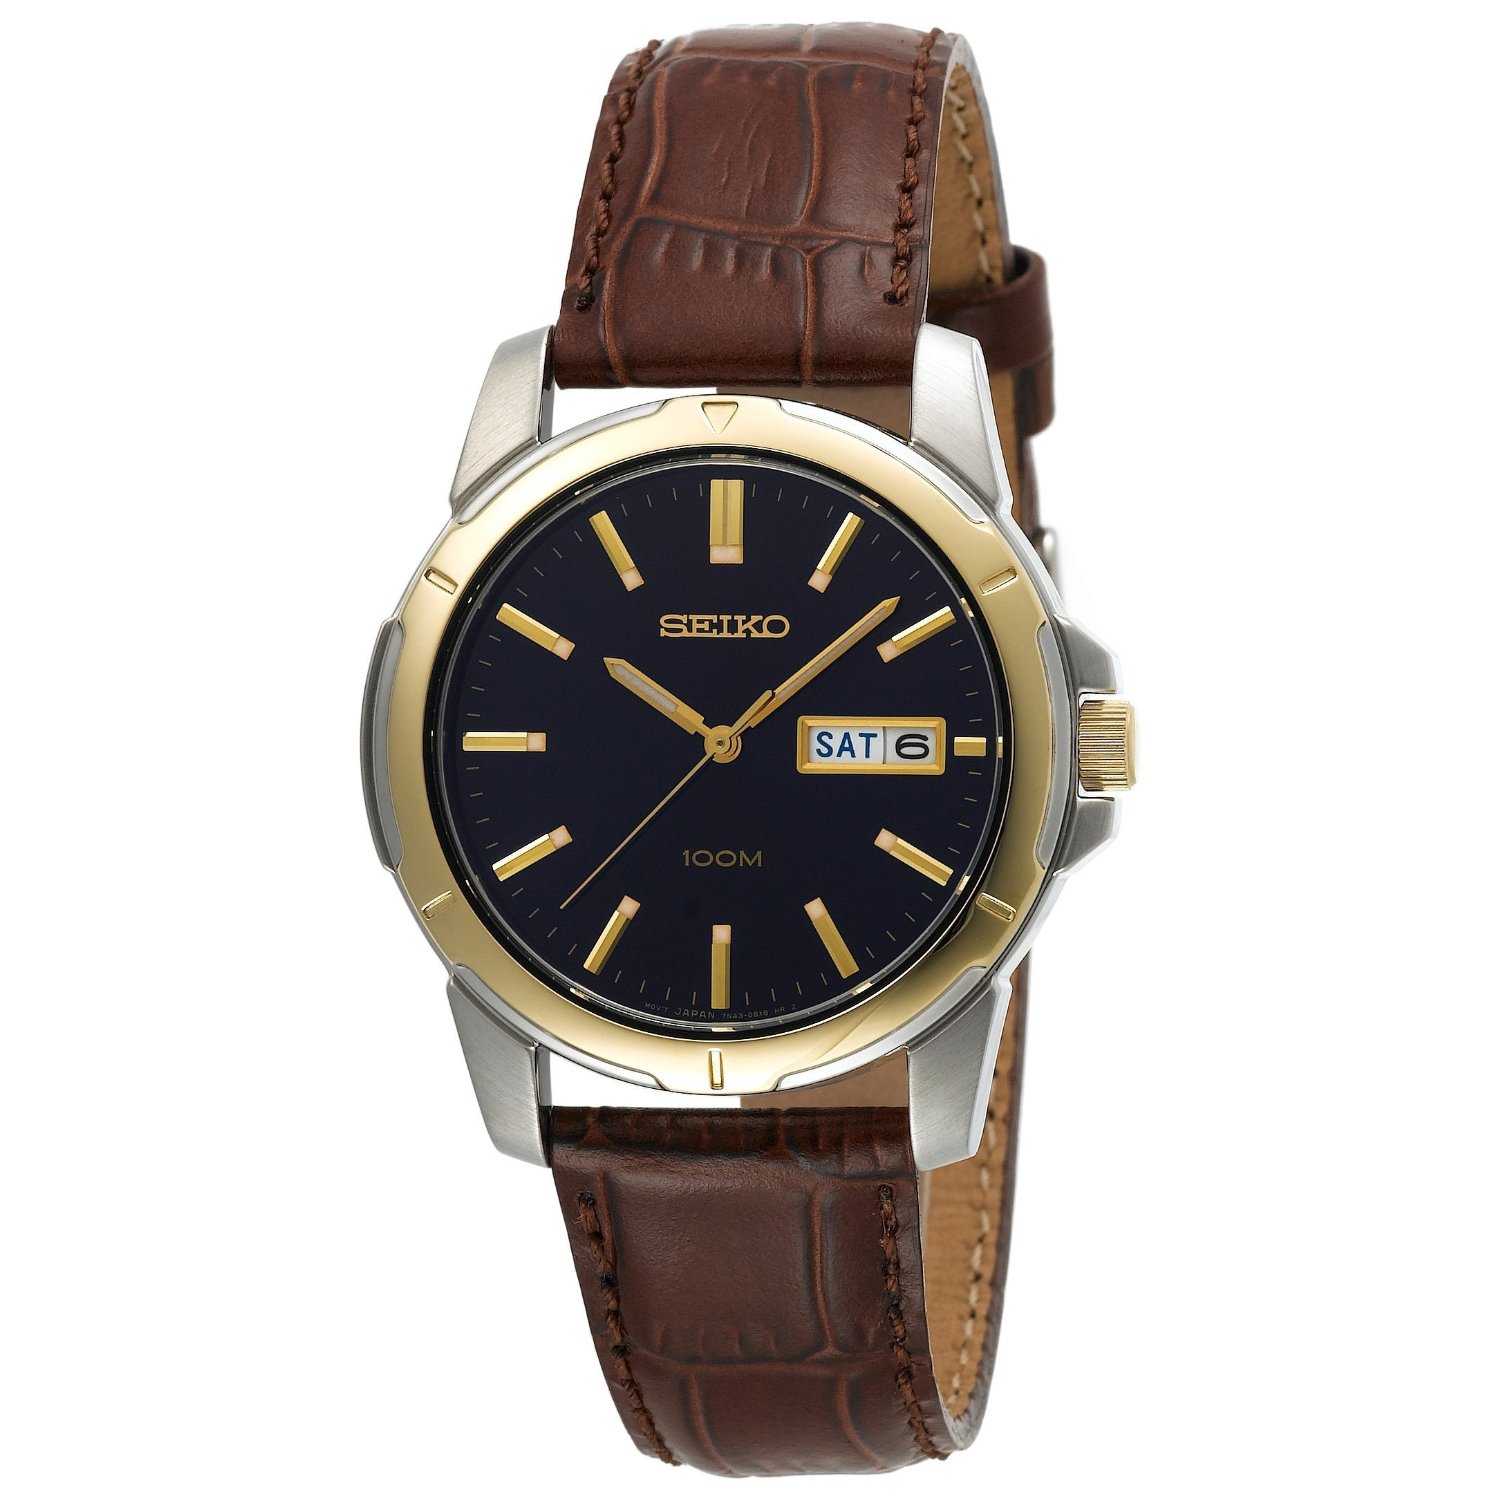 Seiko Men's SGGA08 Brown Leather Watch